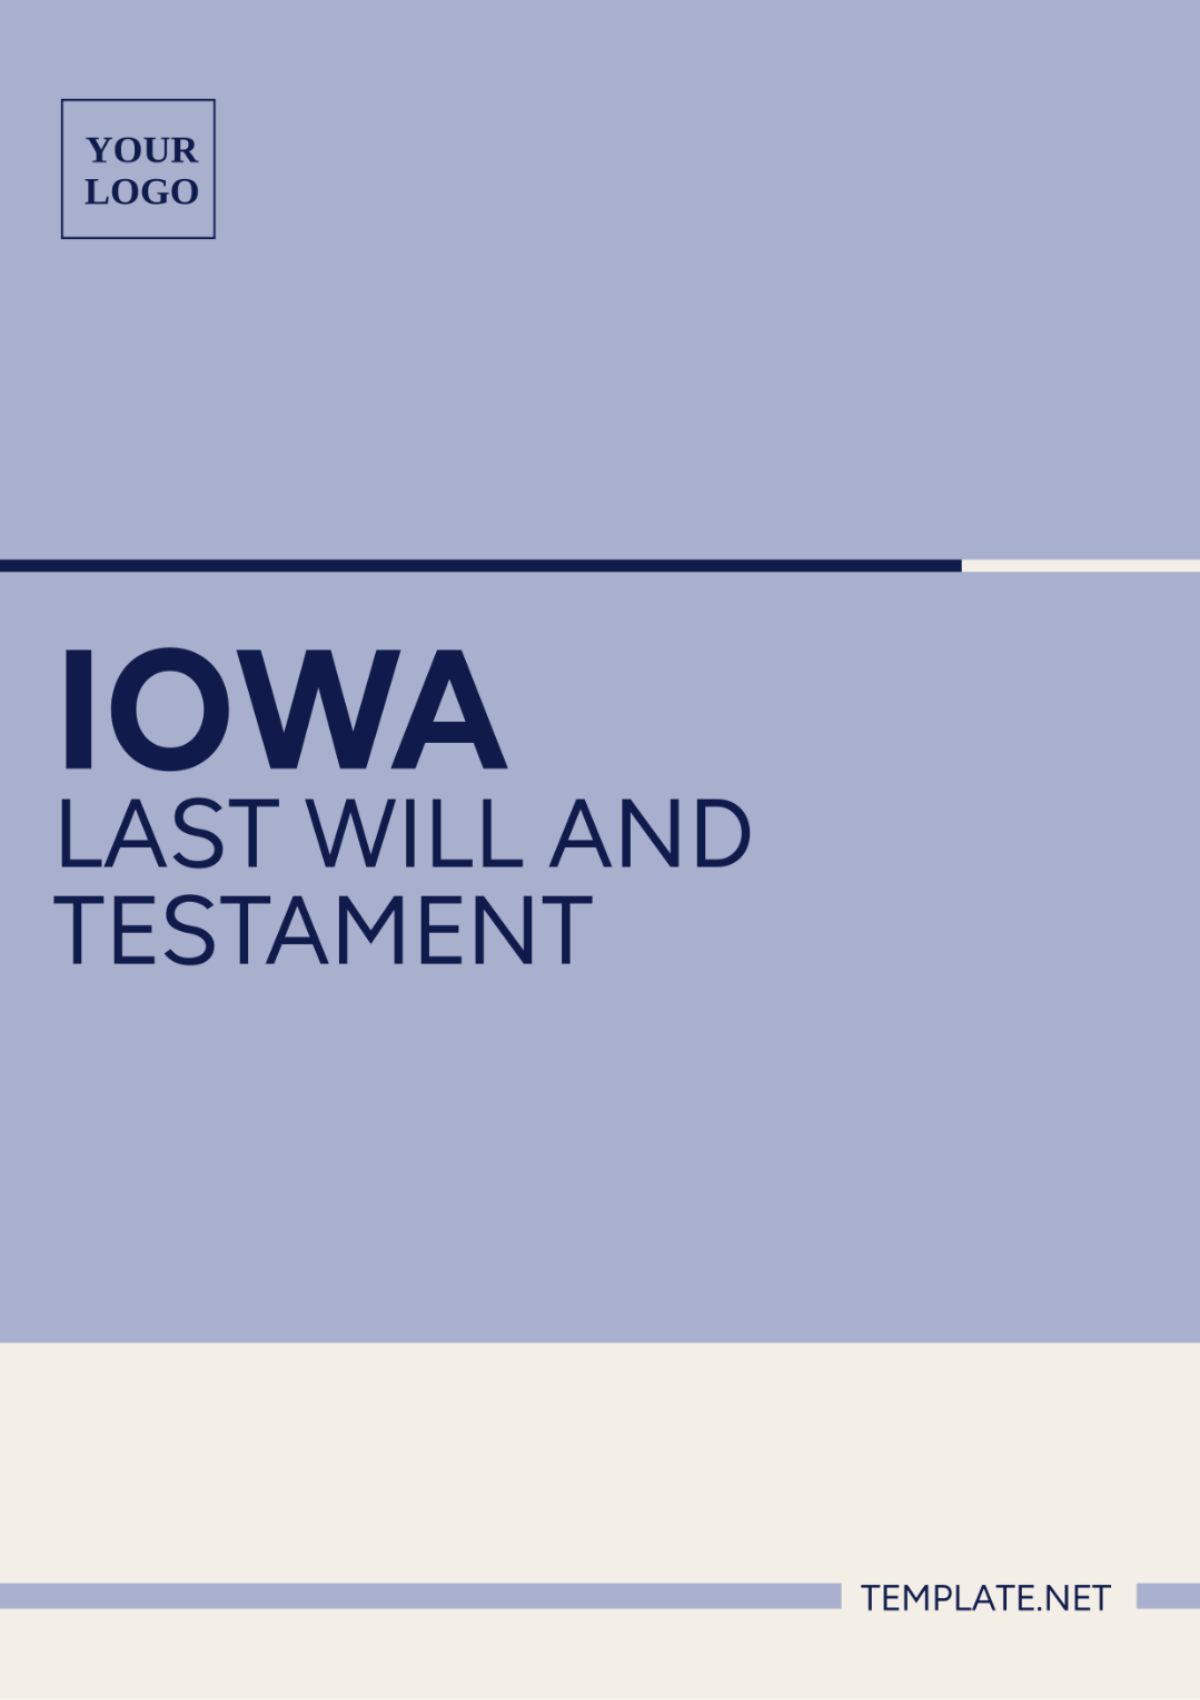 Iowa Last Will and Testament Template